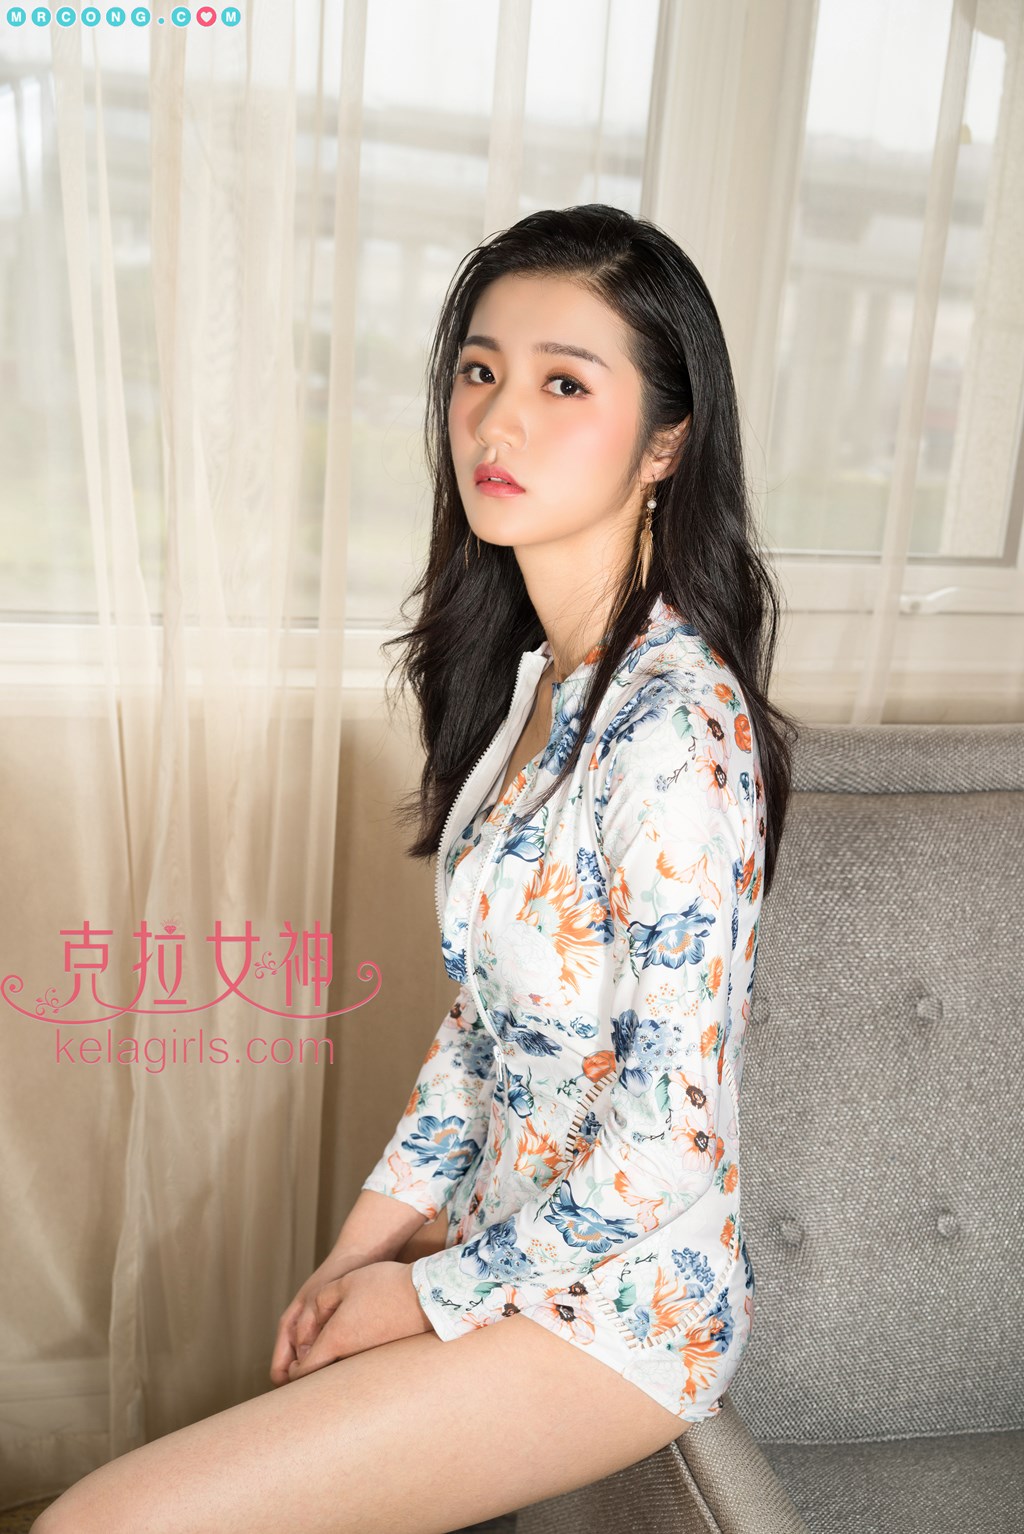 KelaGirls 2018-04-10: Model Qian Qian (倩倩) (28 photos)